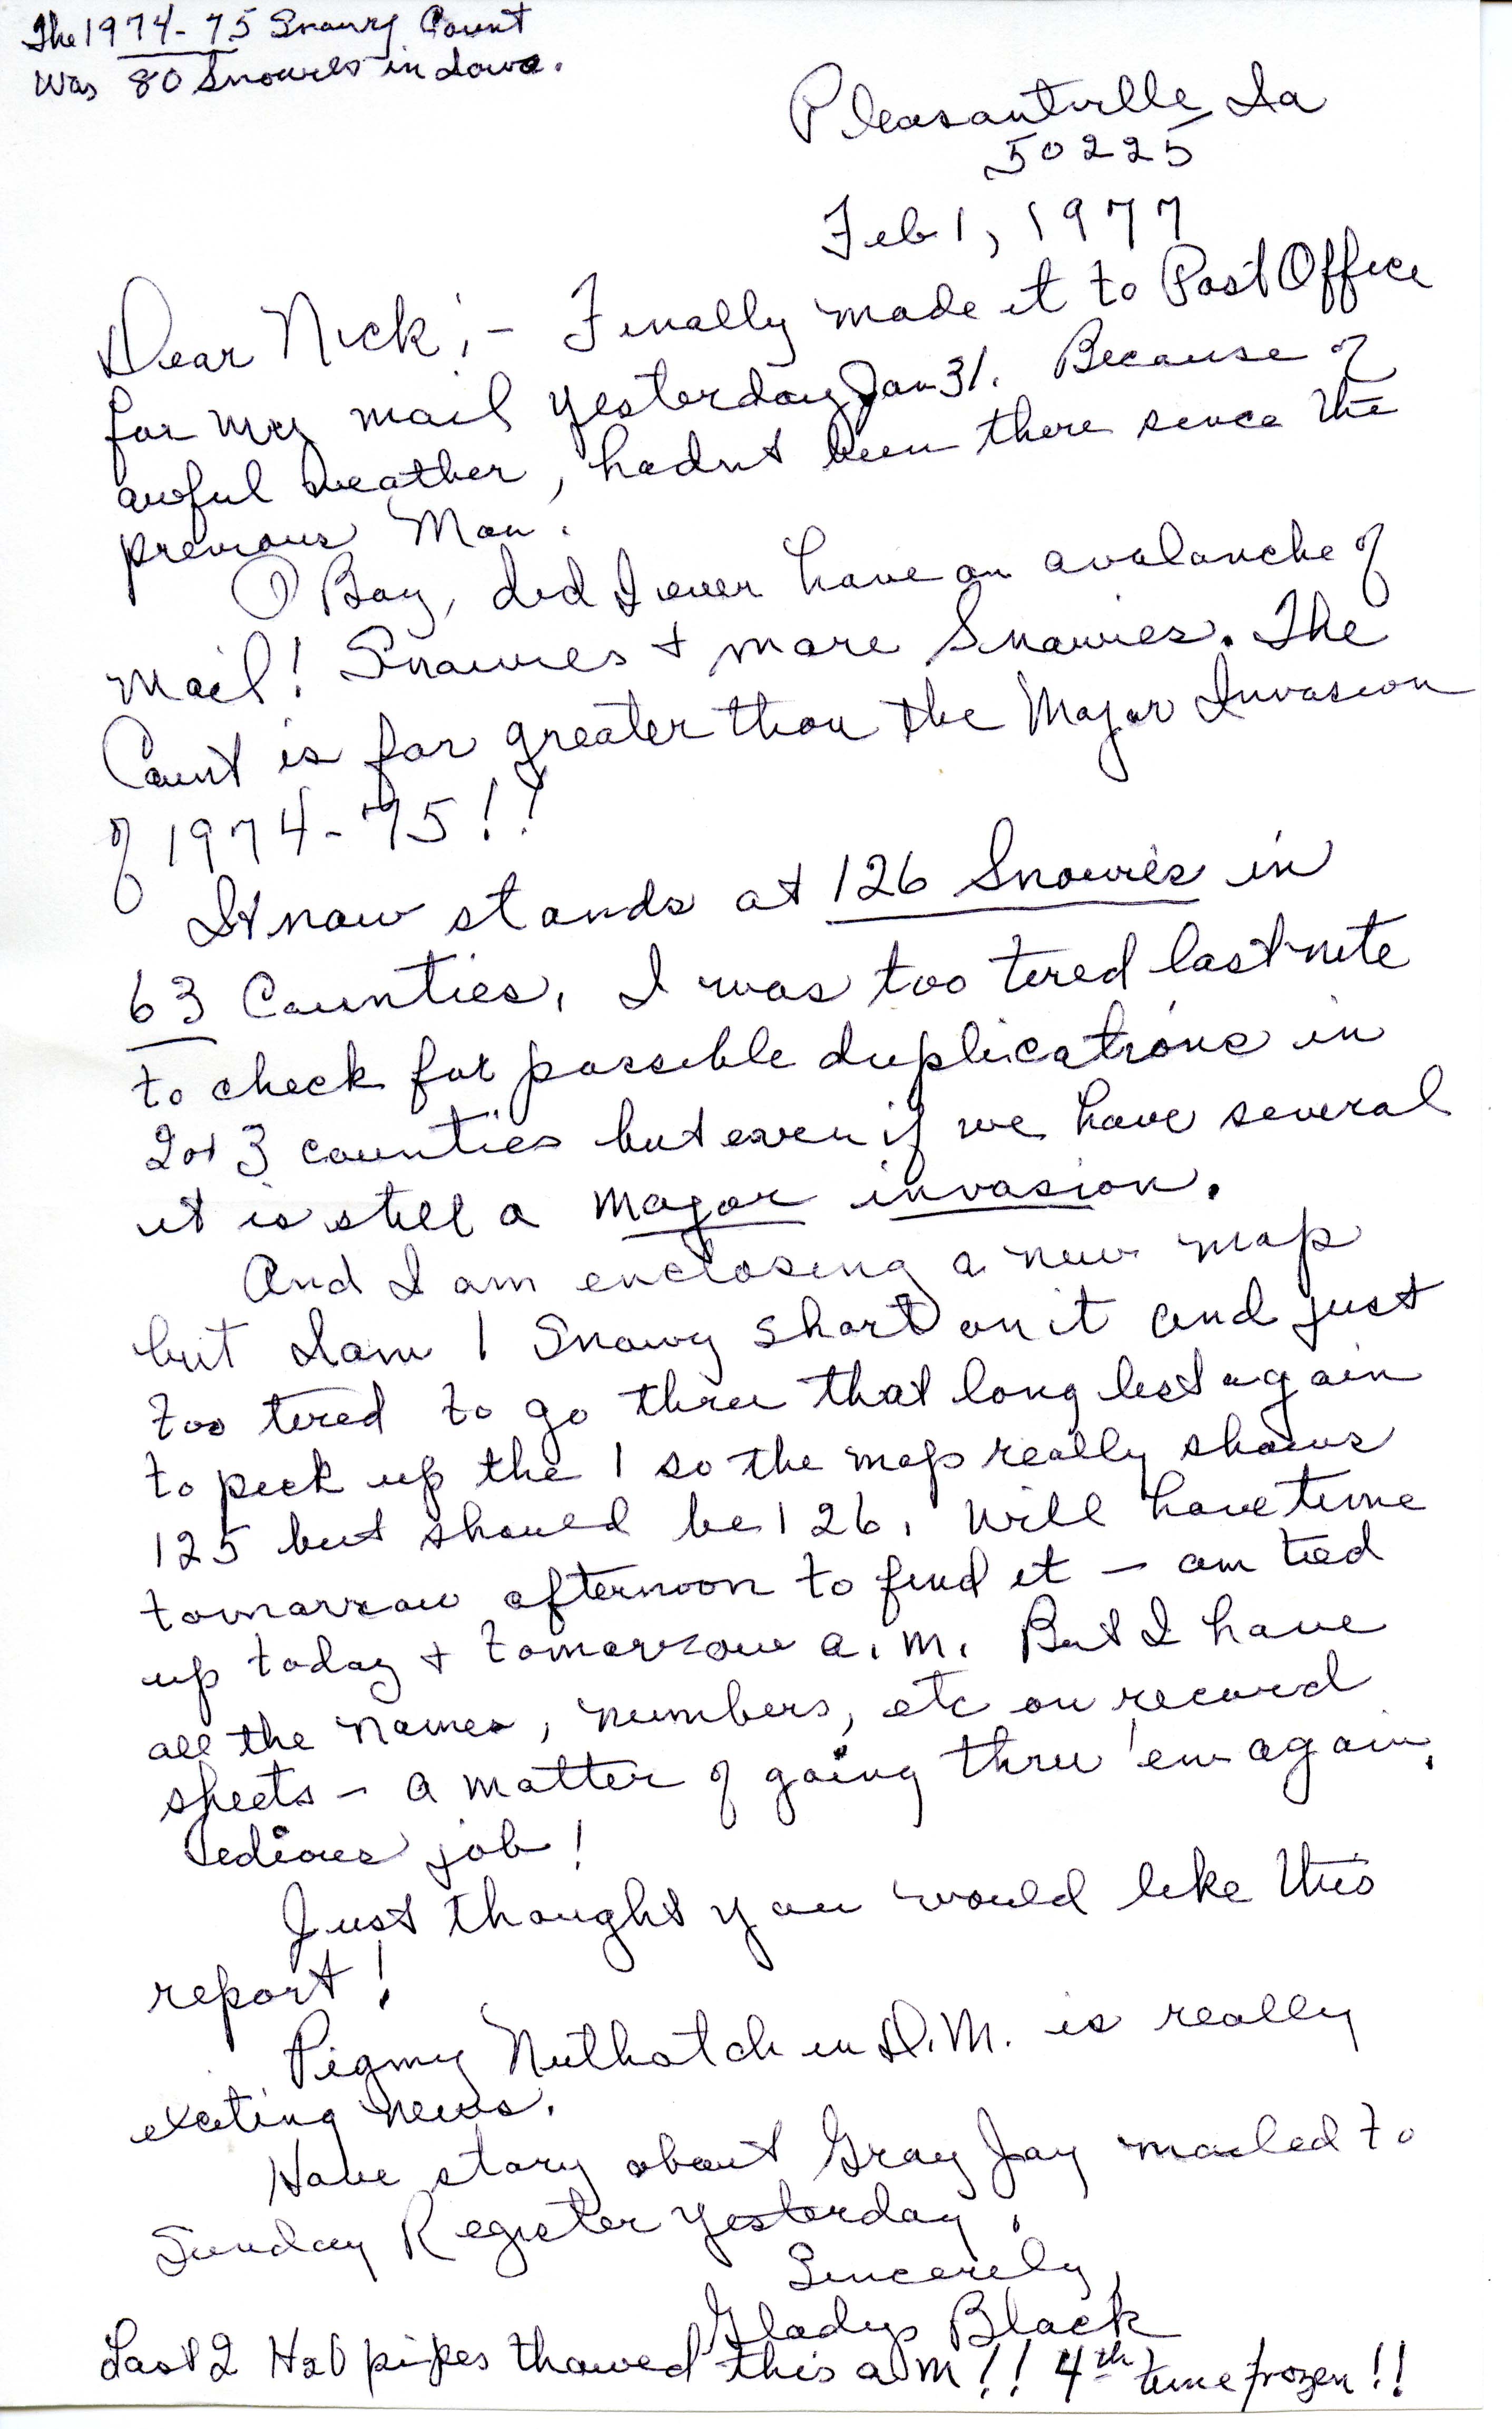 Gladys Black letter to Nicholas S. Halmi regarding Snowy Owl count, February 1, 1977